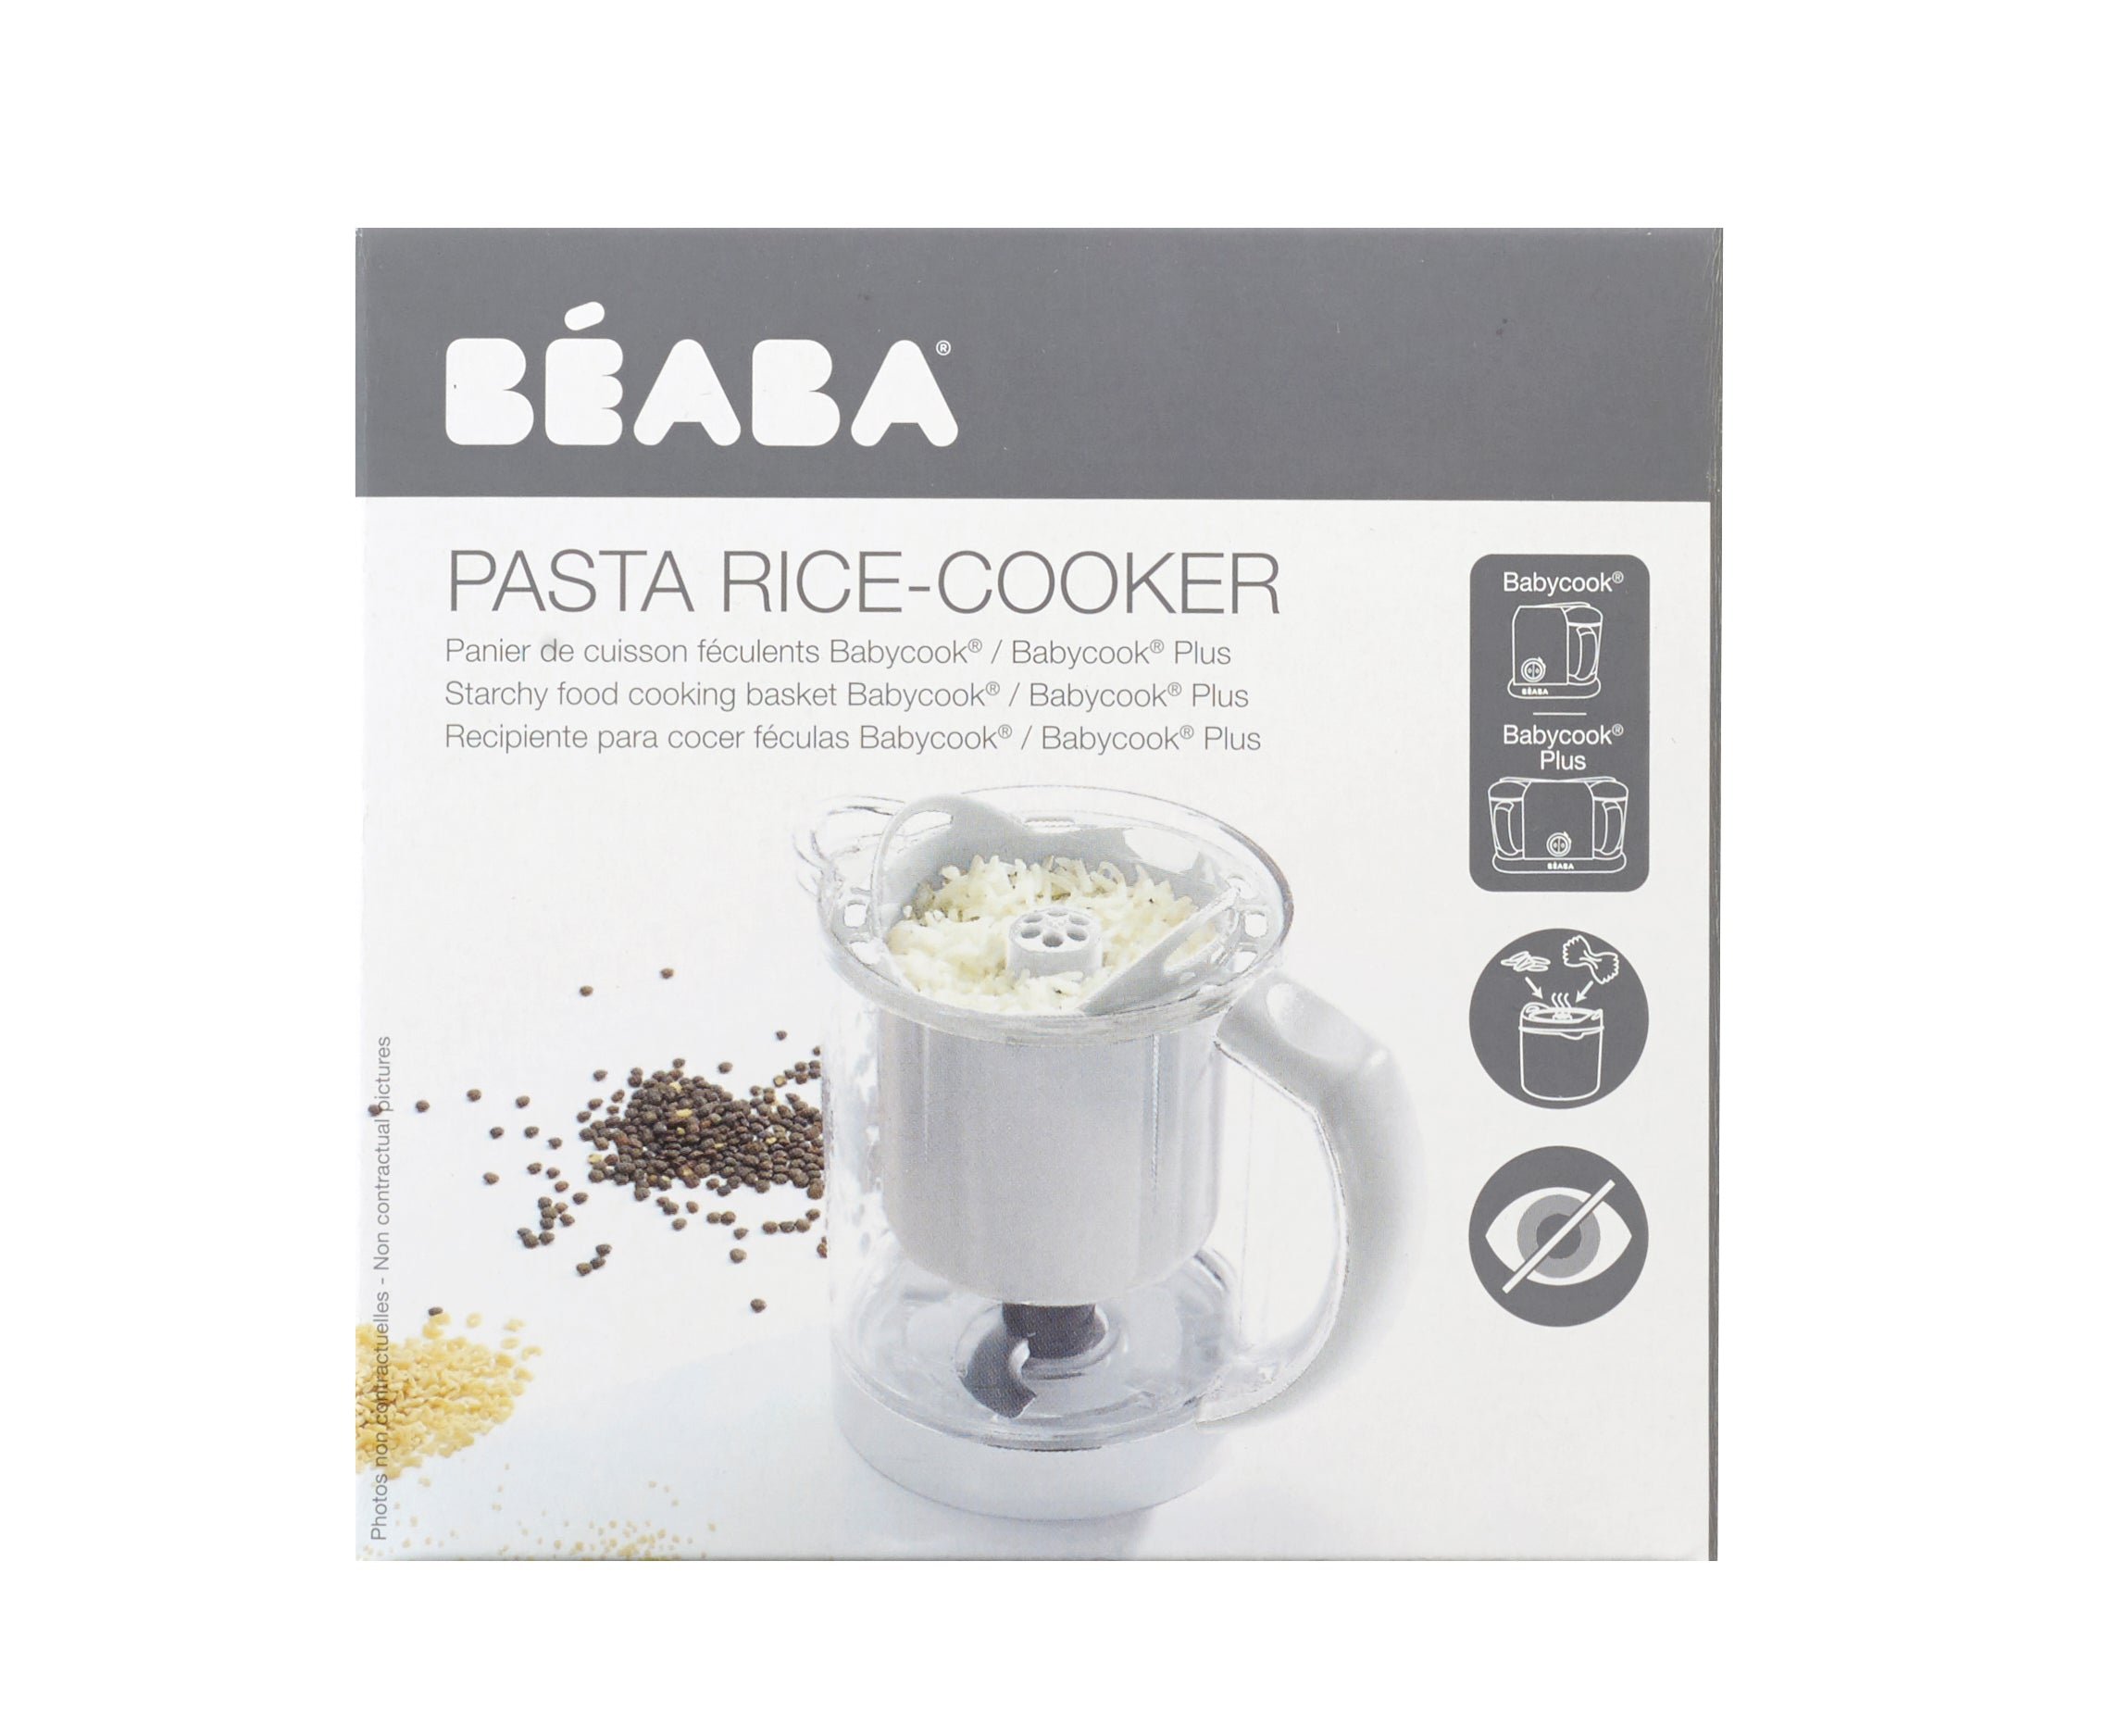 BEABA PASTA/RICE COOKER FOR BABYCOOK®/BABYCOOK® PLUS